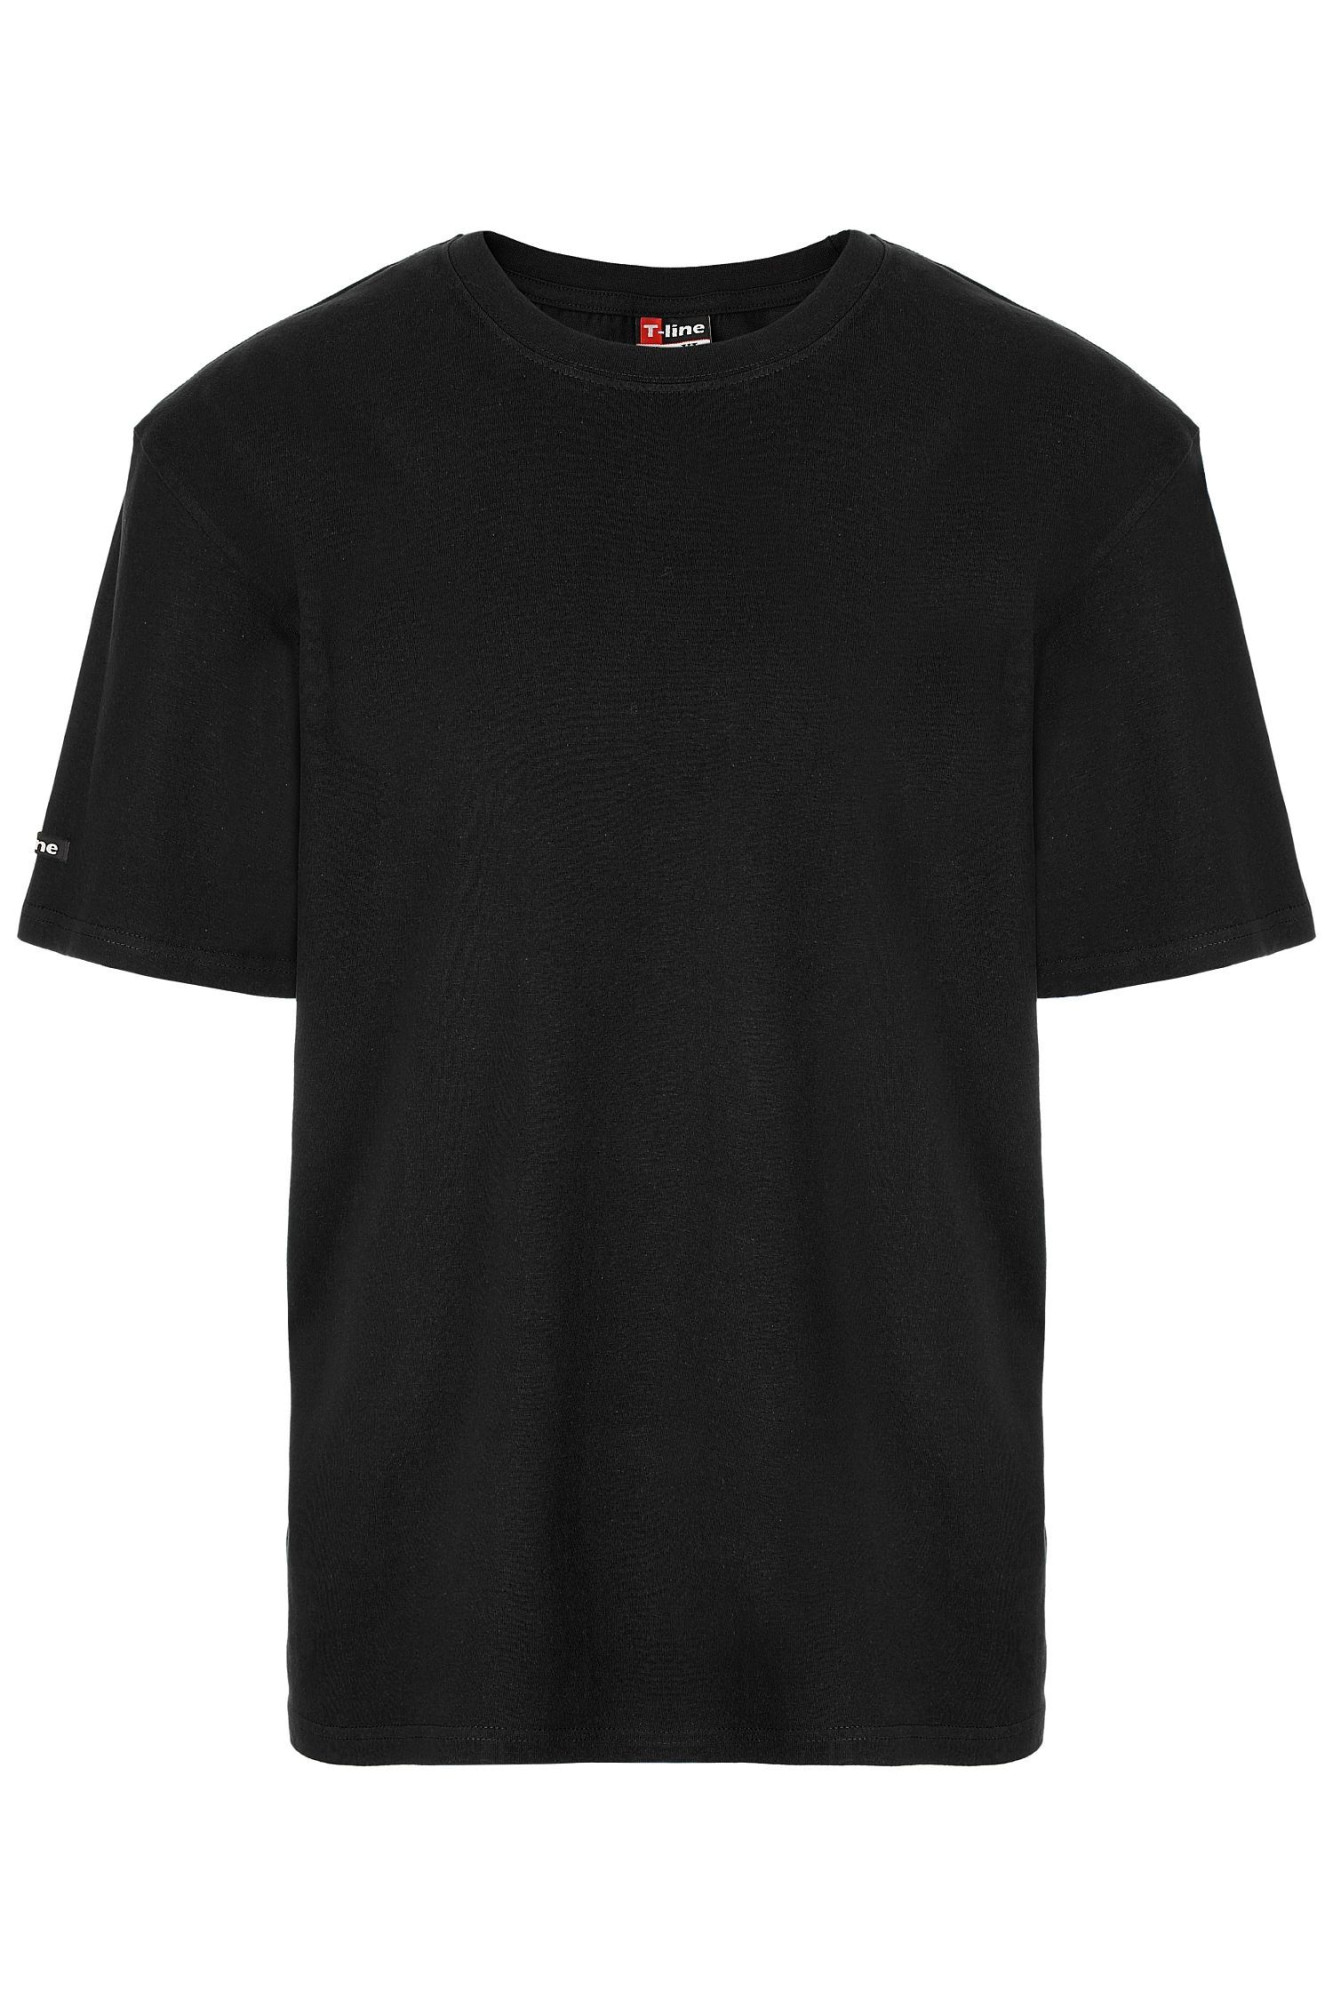 Pánské tričko 19407 T-line black - HENDERSON černá S